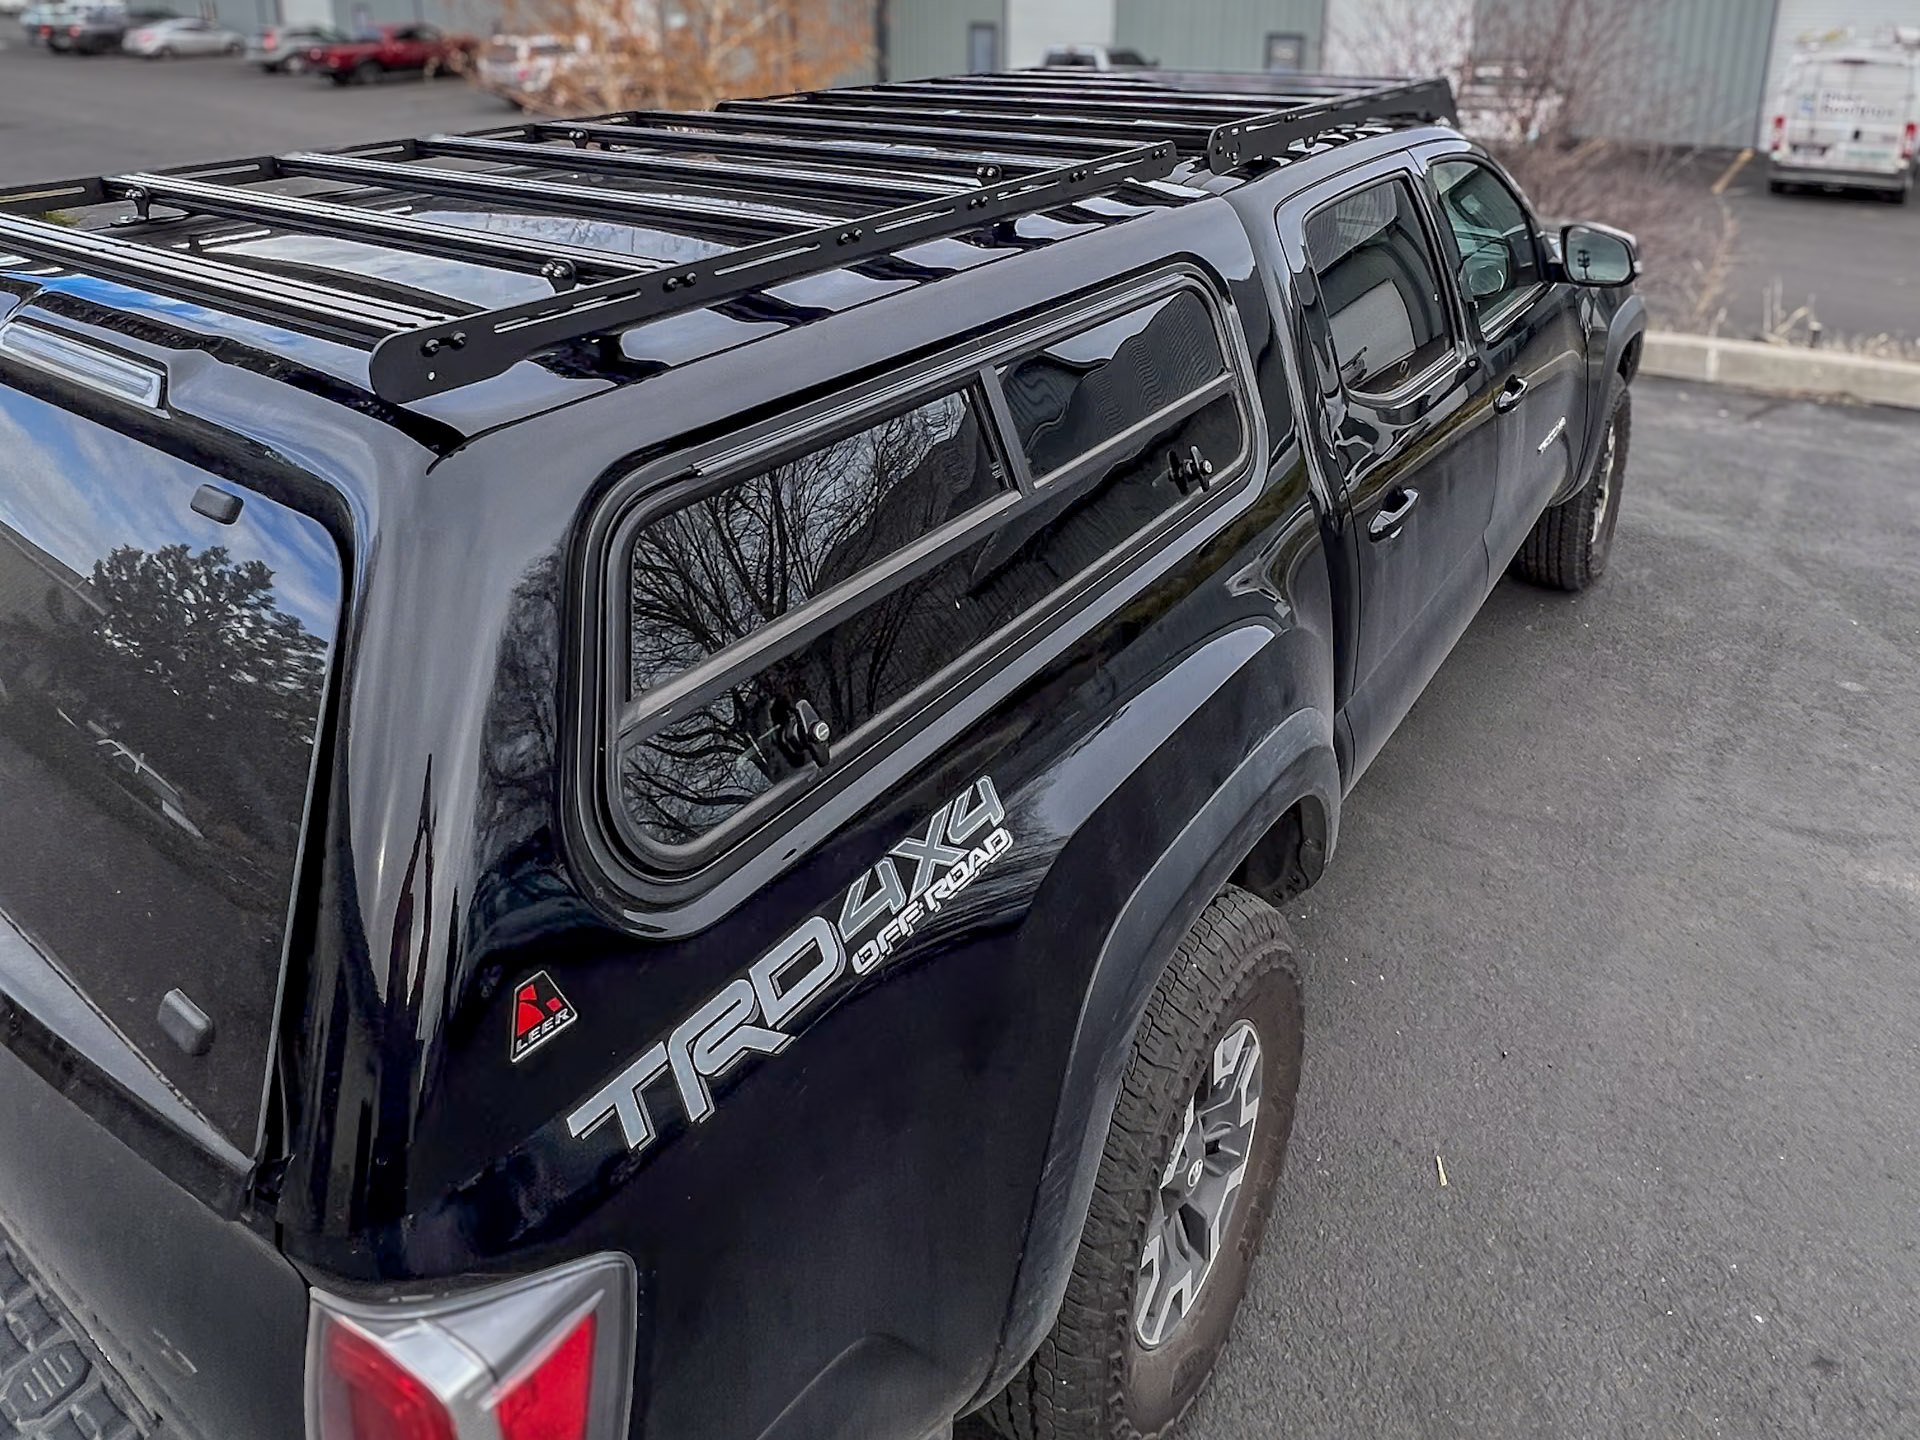 2022 Toyota Tacoma - Cab and Canopy Platform Rack Installation - Prinsu